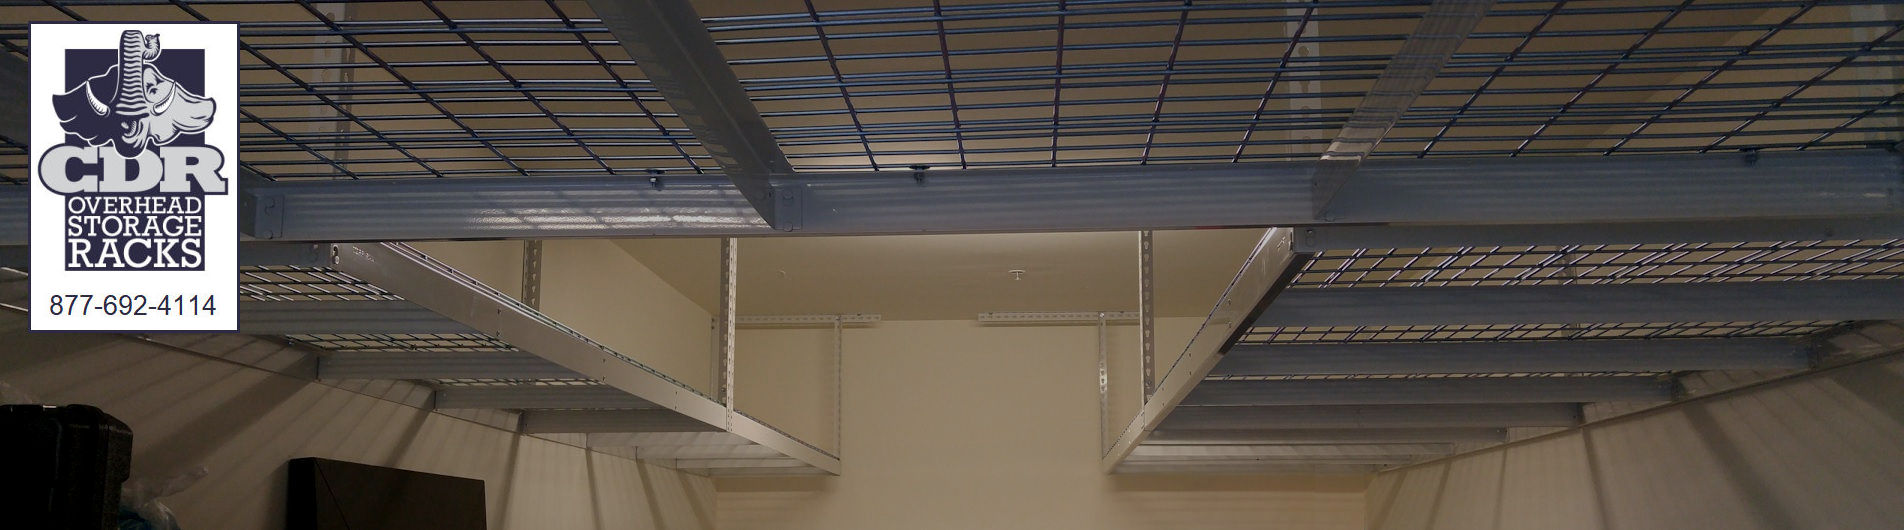 CDR Overhead Storage Racks - Lacey WA - Garage Overhead Storage Rack Installation in Lacey WA